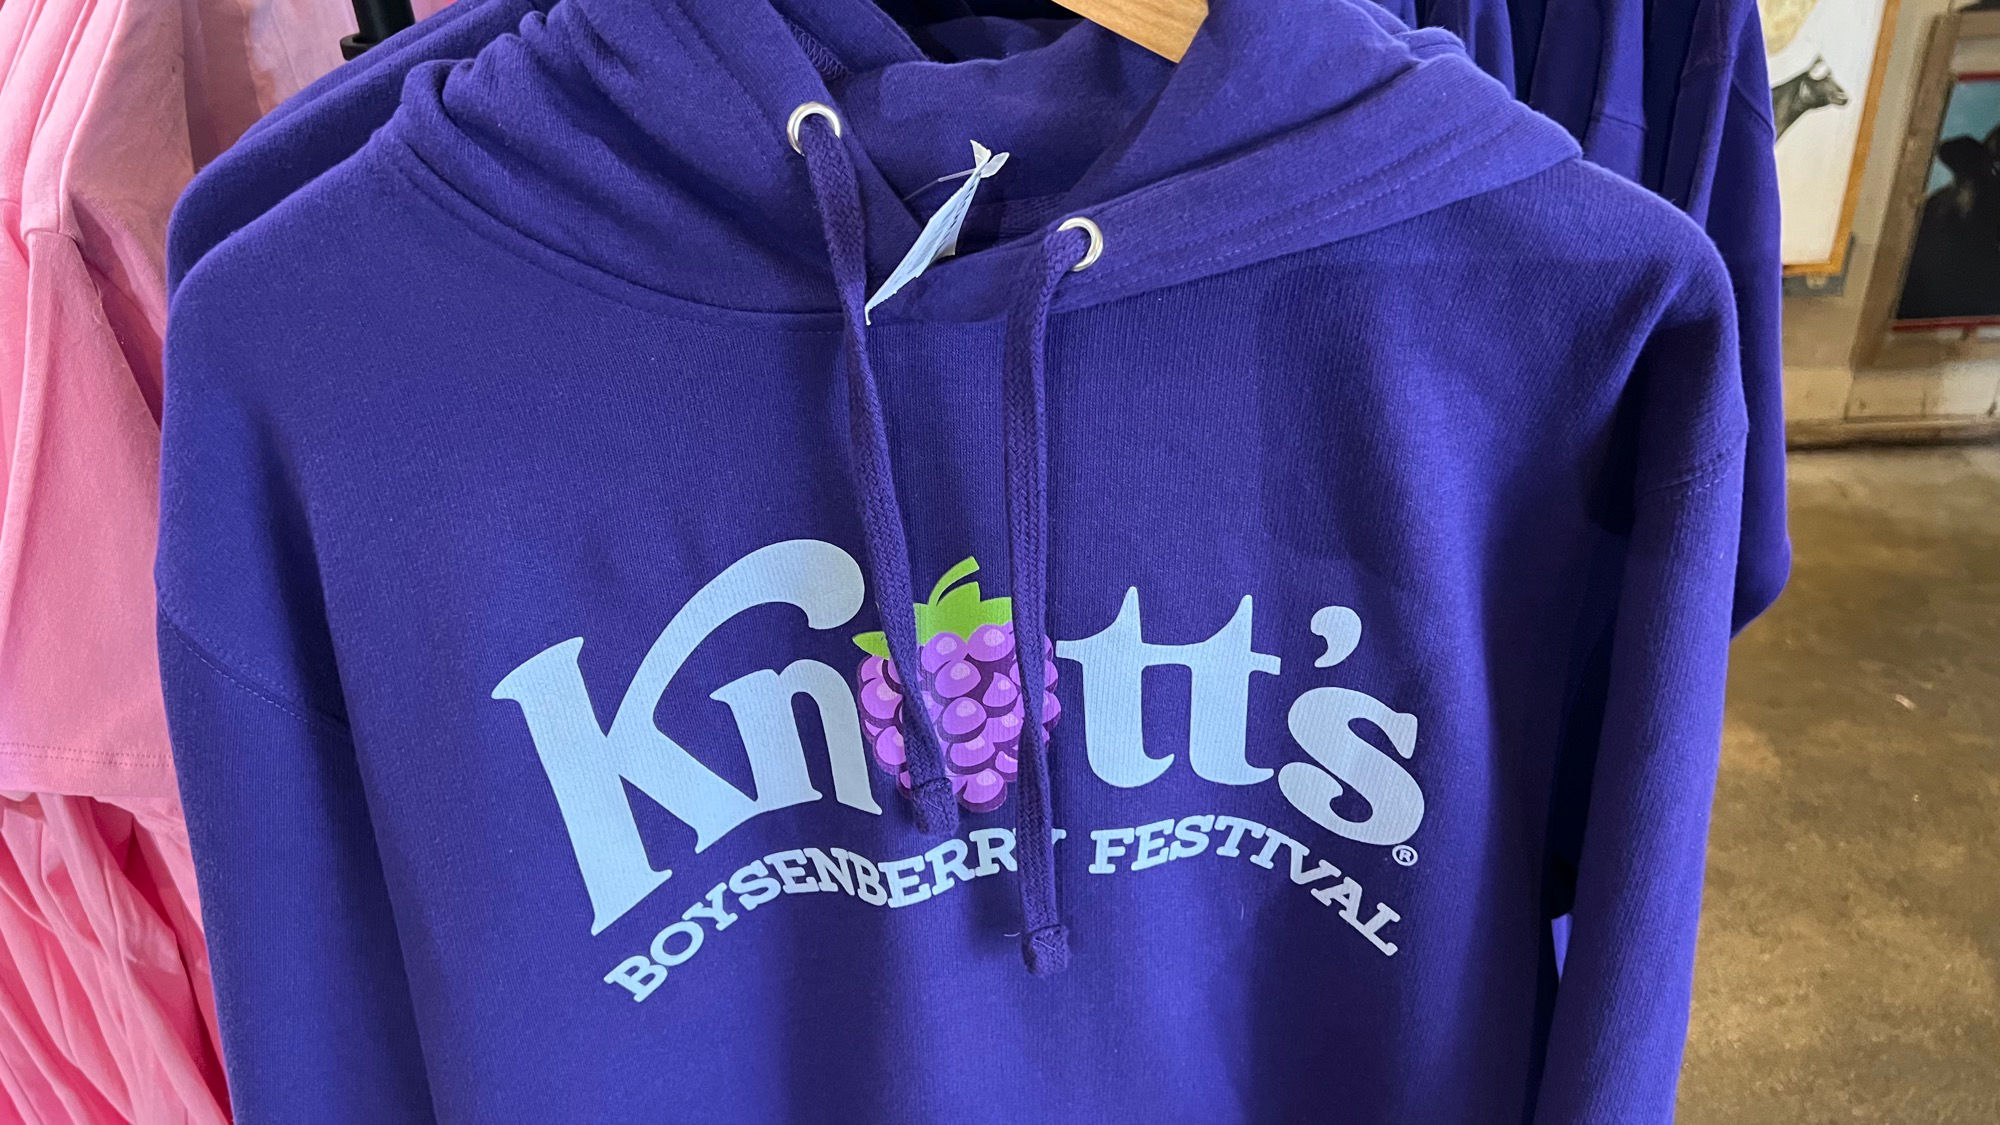 General Store Boysenberry Festival Sweatshirt